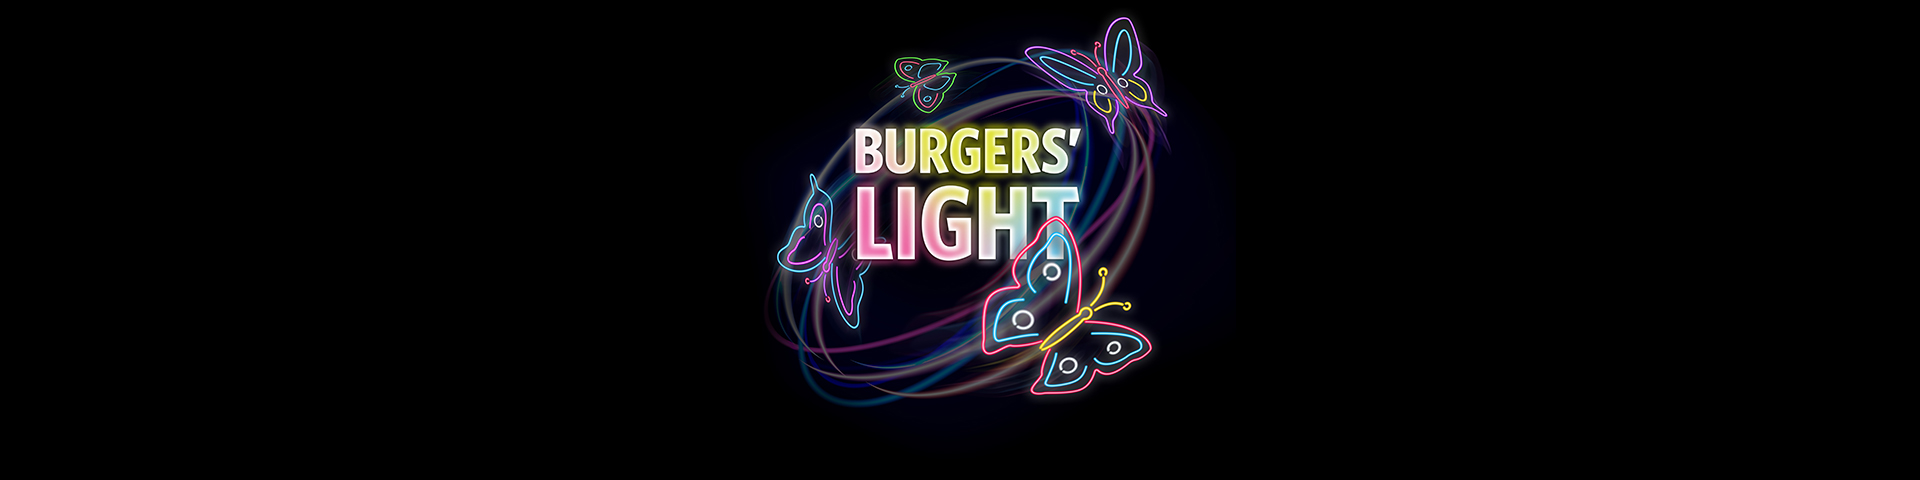 Burgers' Light: Lichttheater van ei tot vlinder